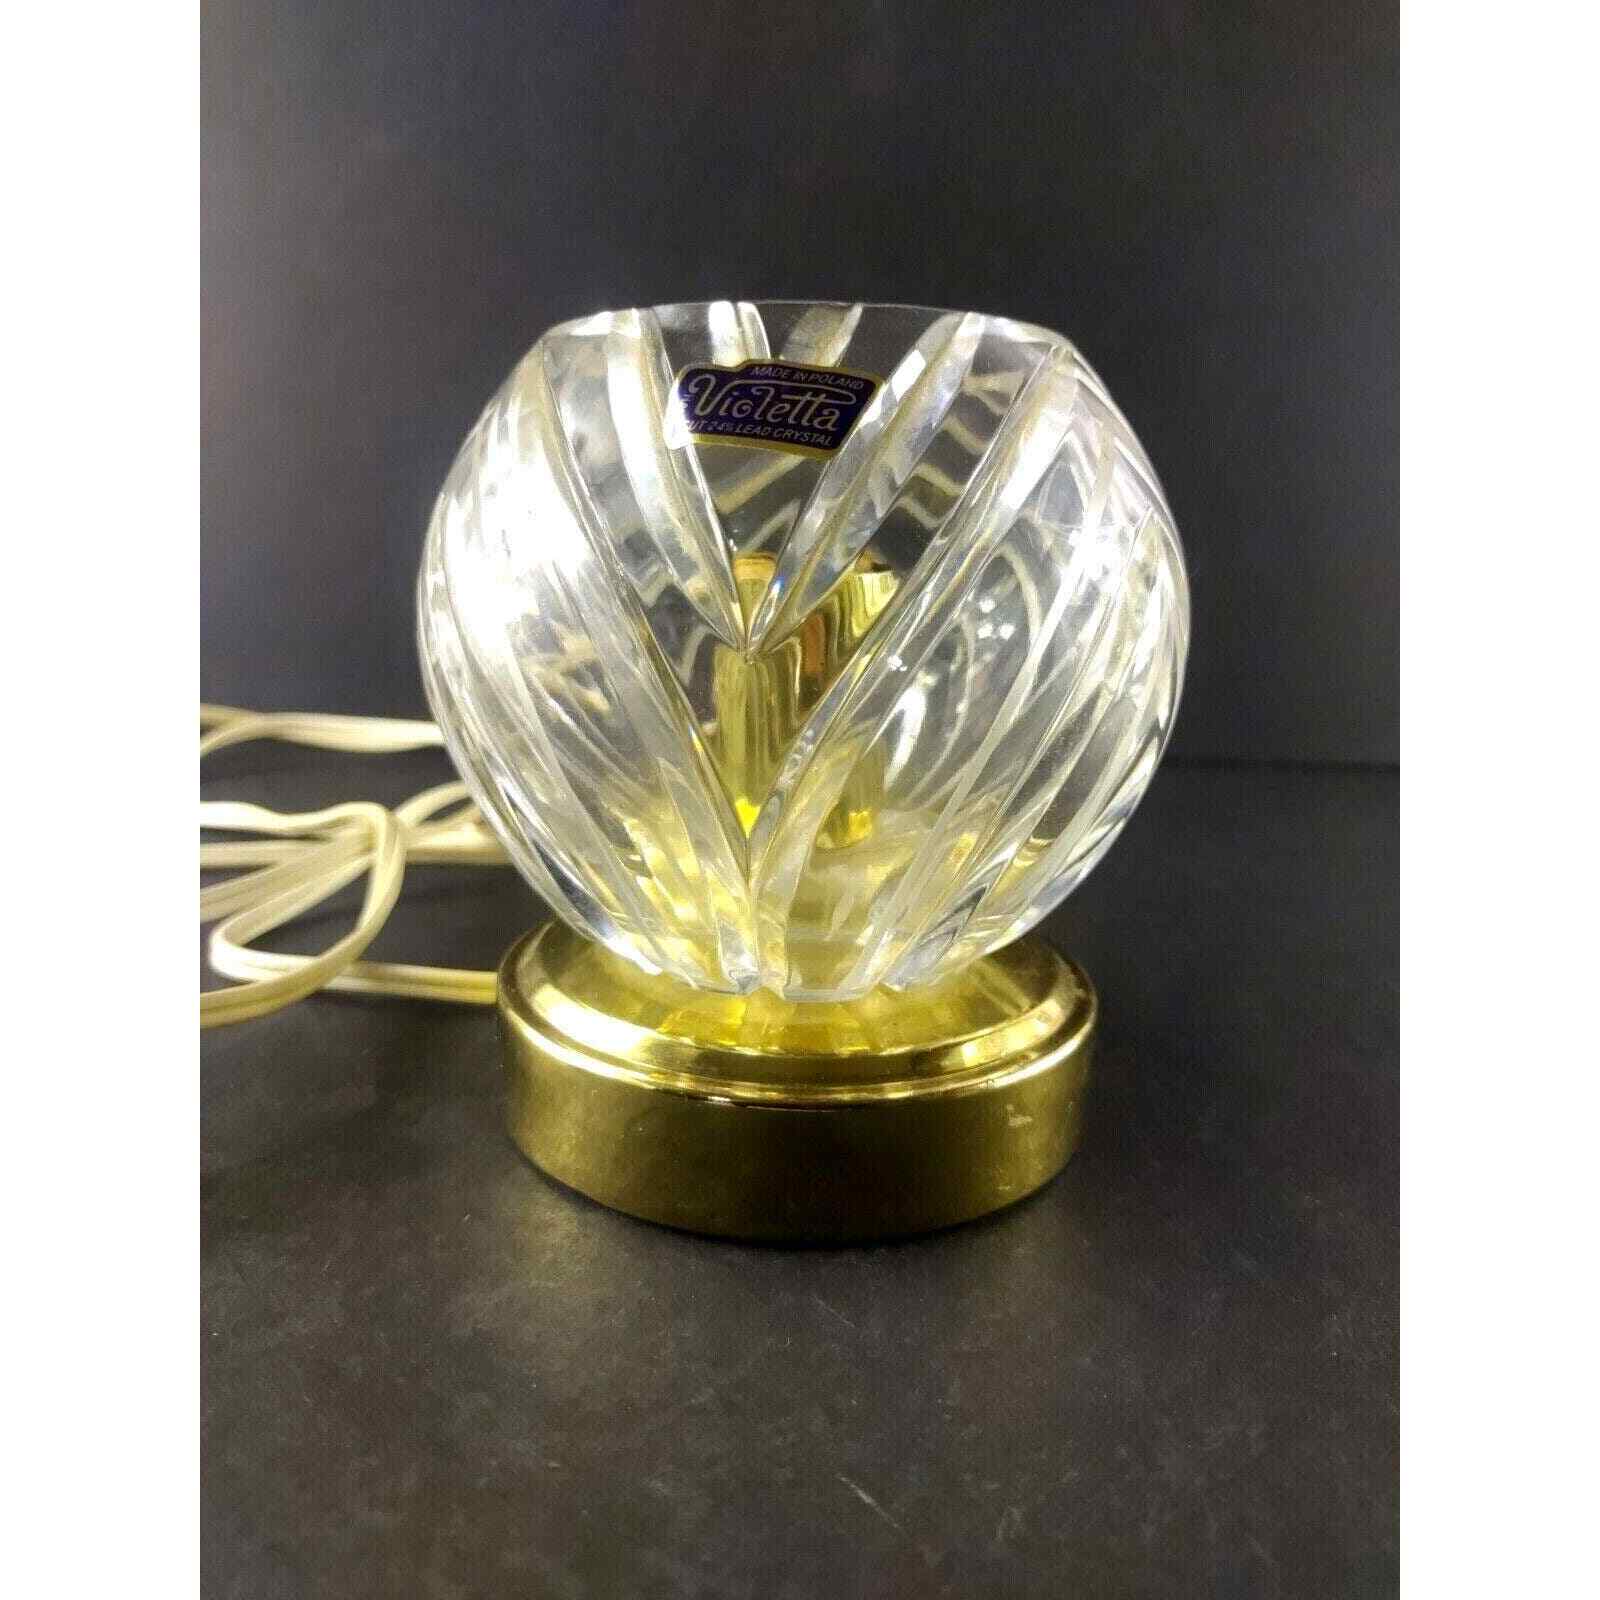 Violetta 24K Lead Crystal Light Boudoir Bedside Table Lamp